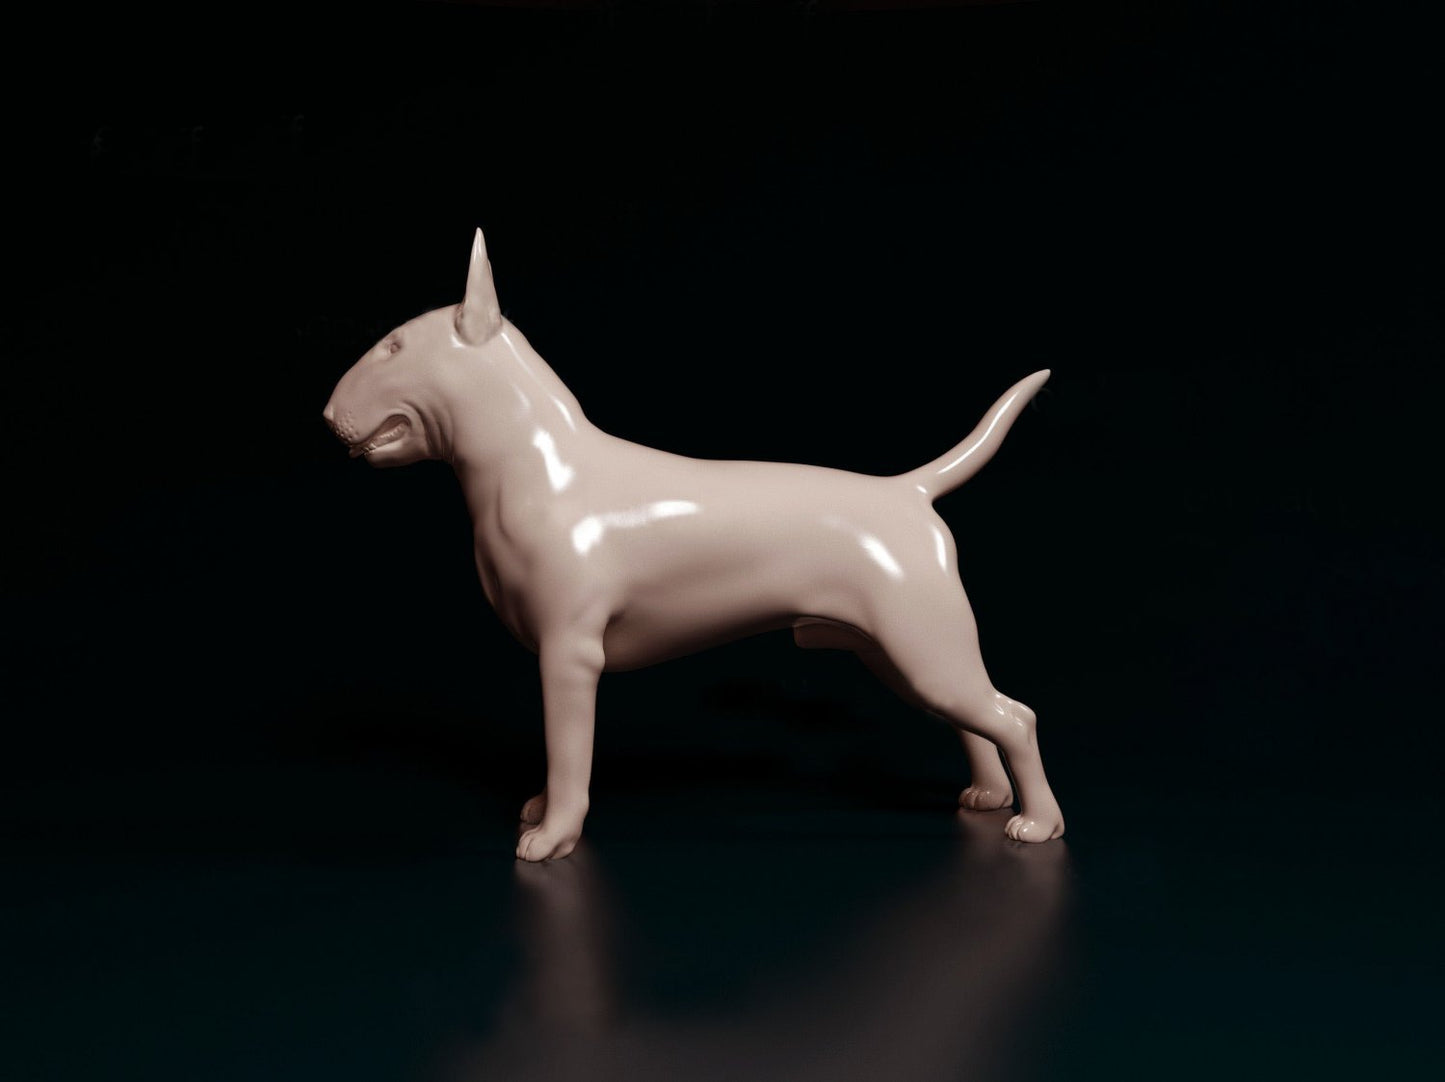 Bull terrier 2 artist resin - white resin ready to prep / paint ALL SCALES